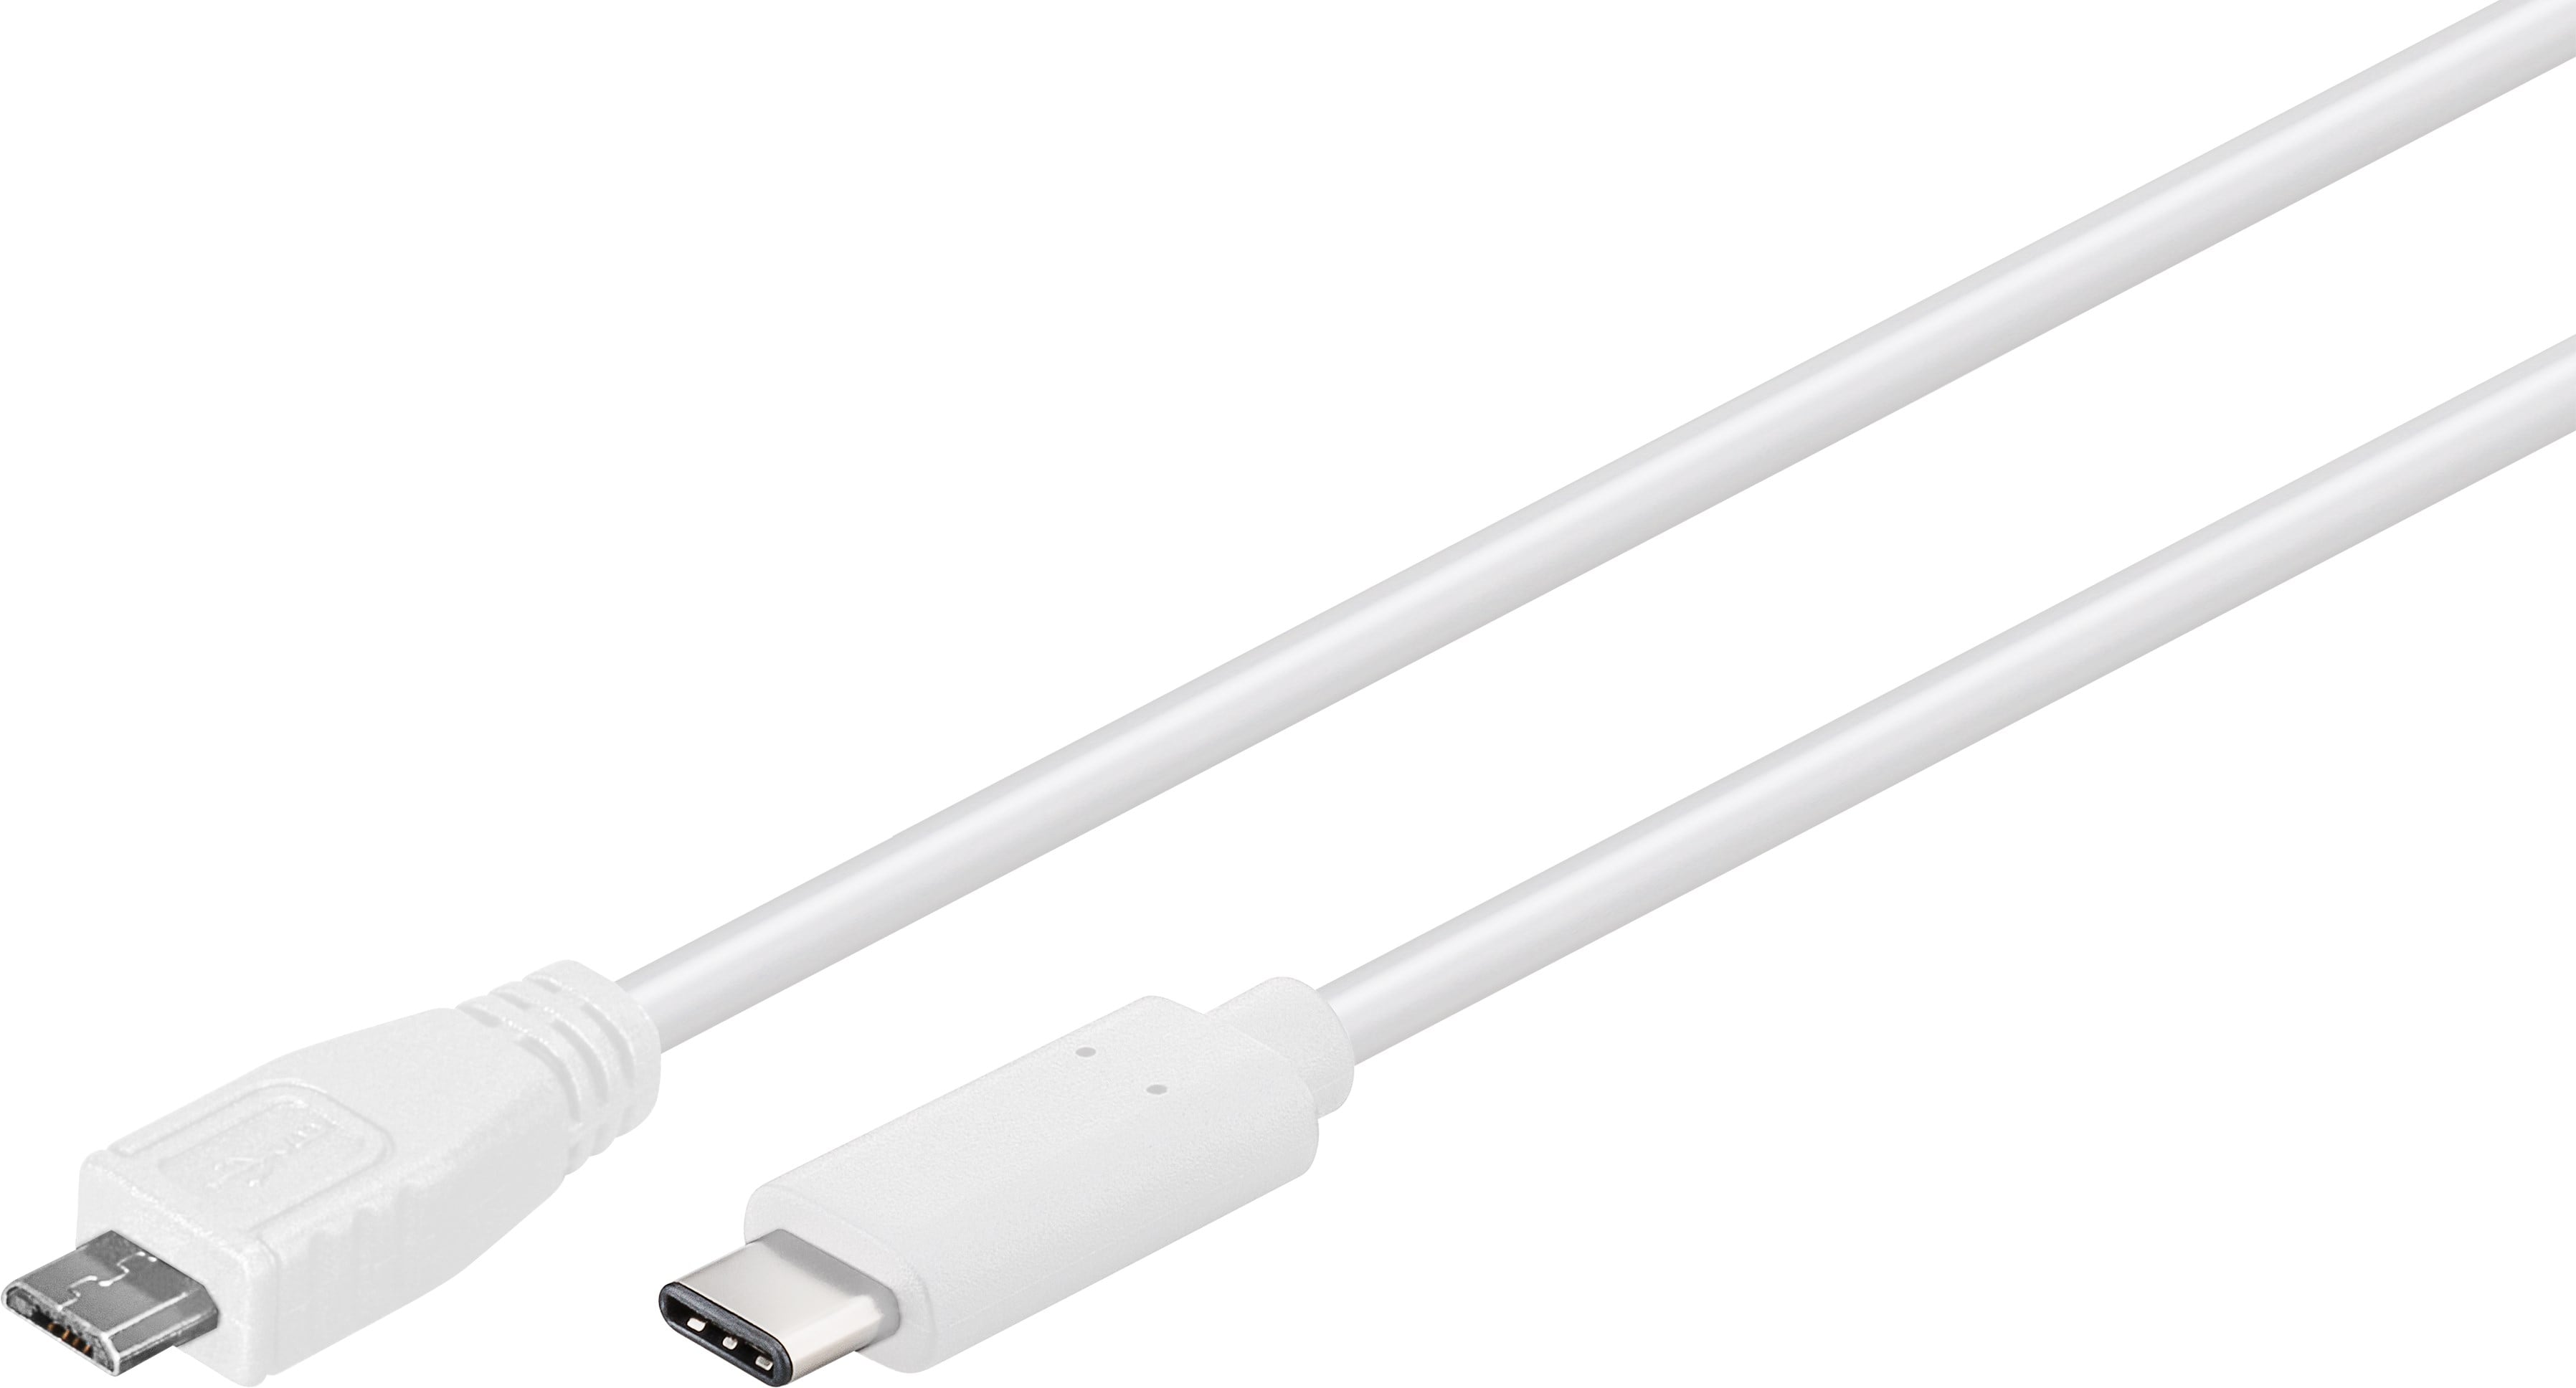 Kabel USB 2.0 micro (type B) til USB-C